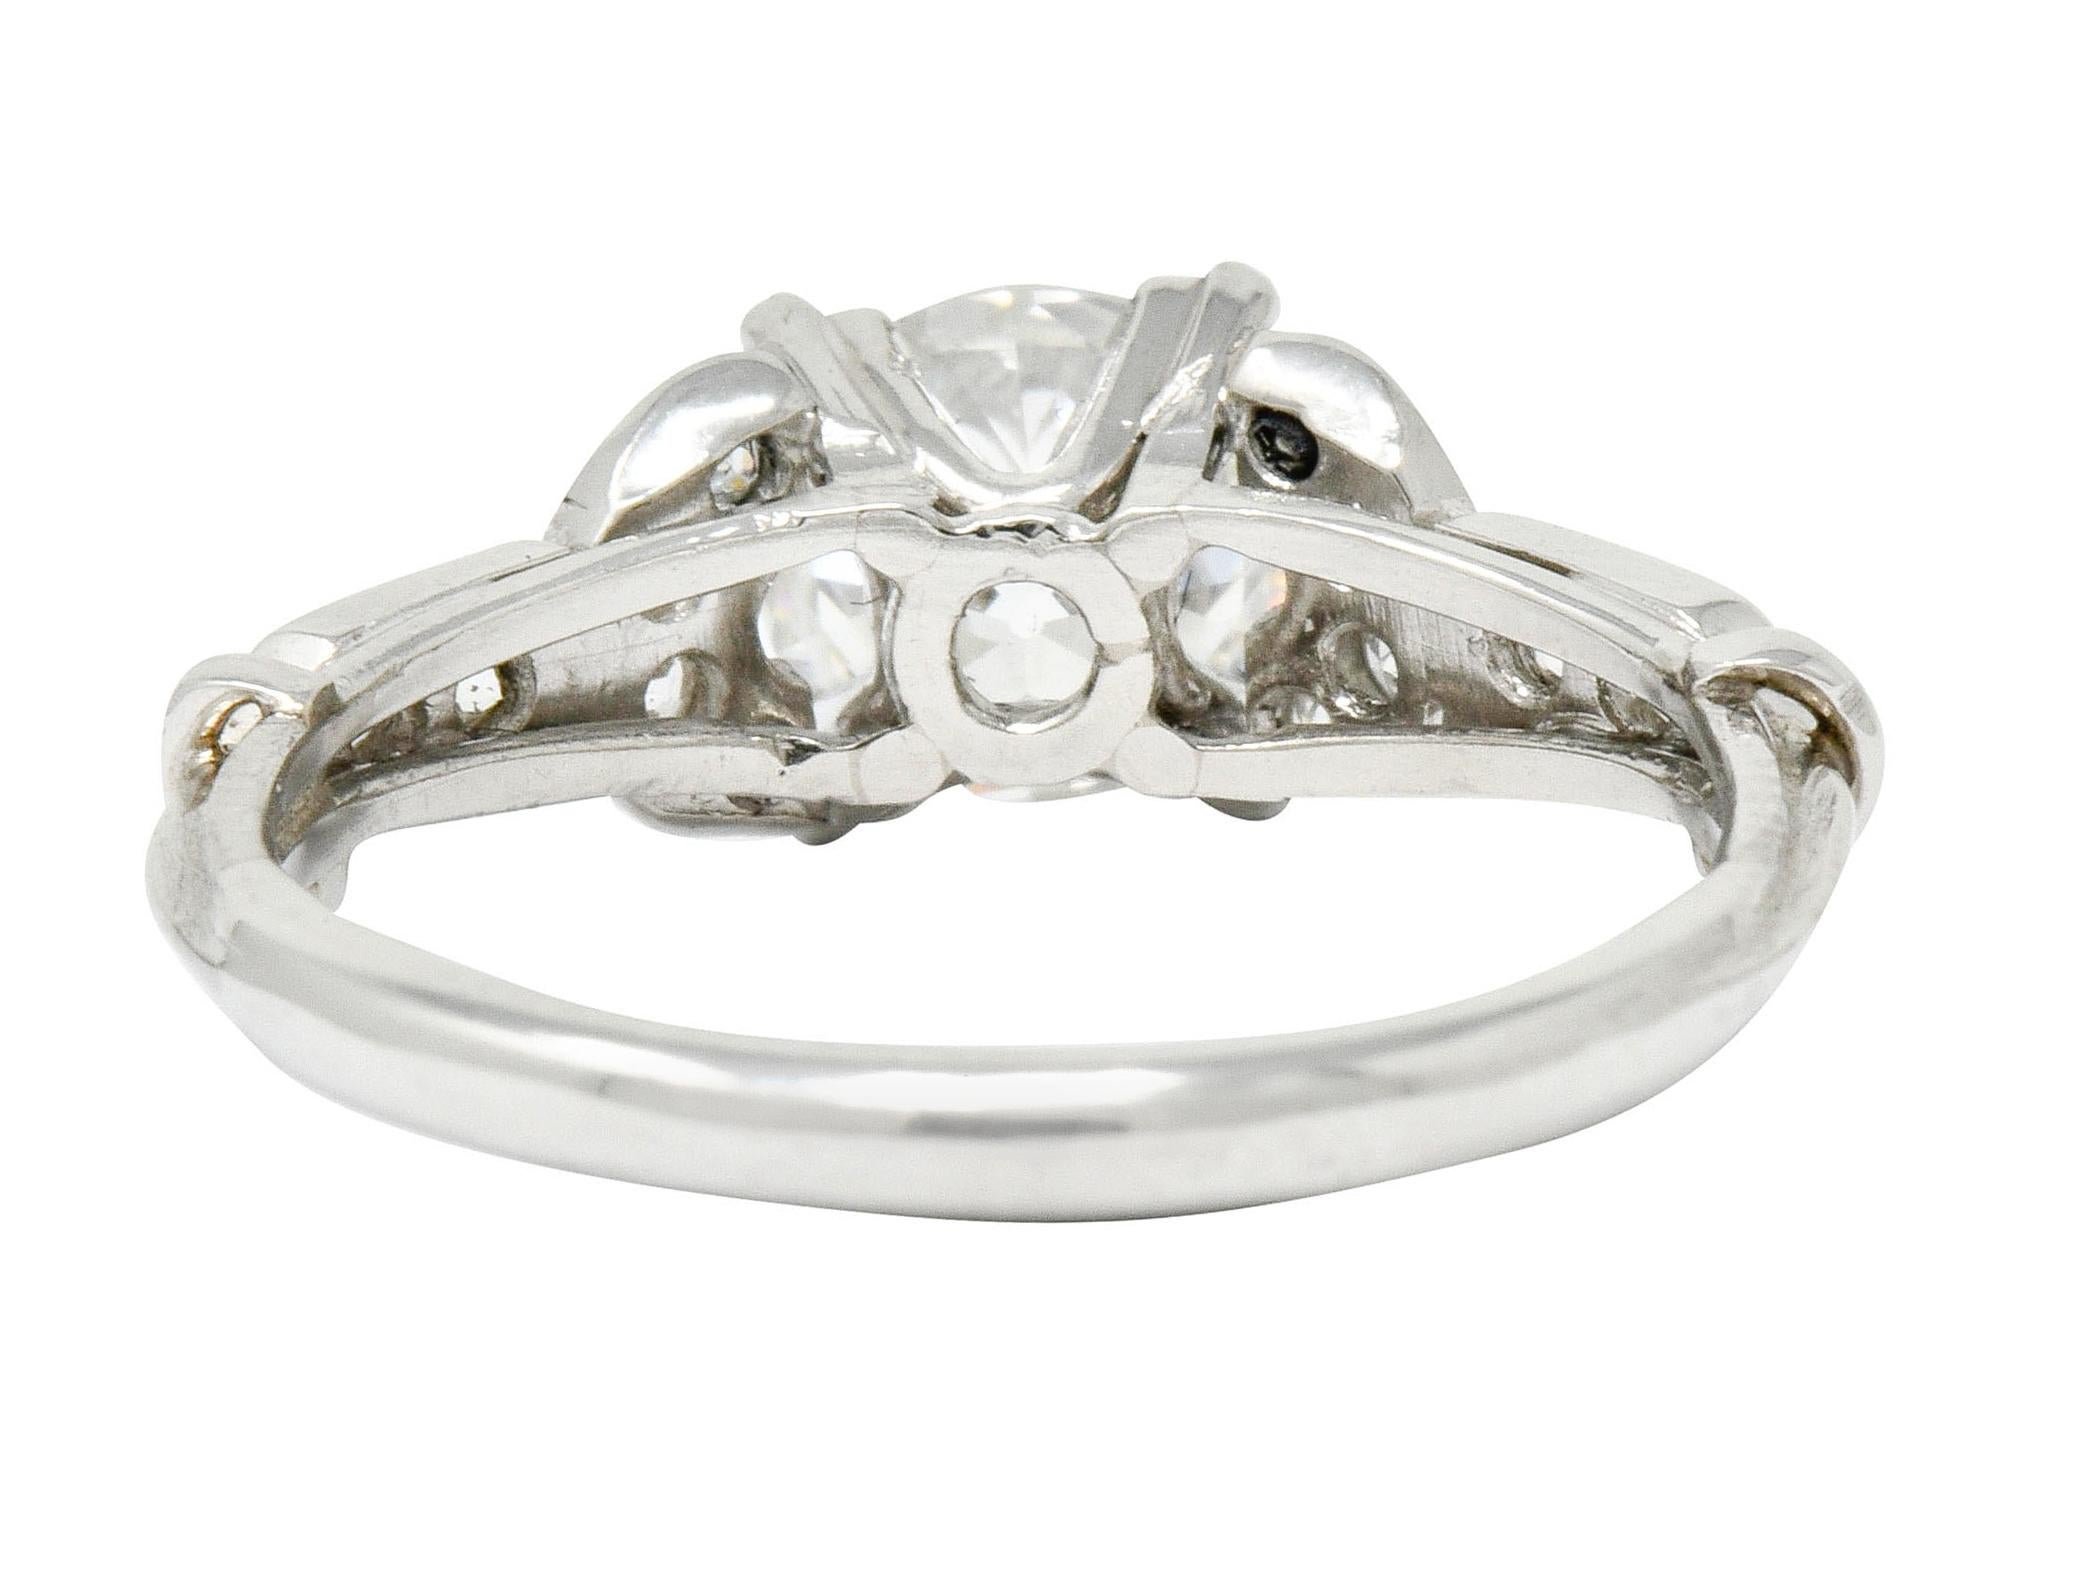 Exquisite Art Deco 1.39 Carats Diamond Platinum Engagement Ring GIA In Fair Condition For Sale In Philadelphia, PA